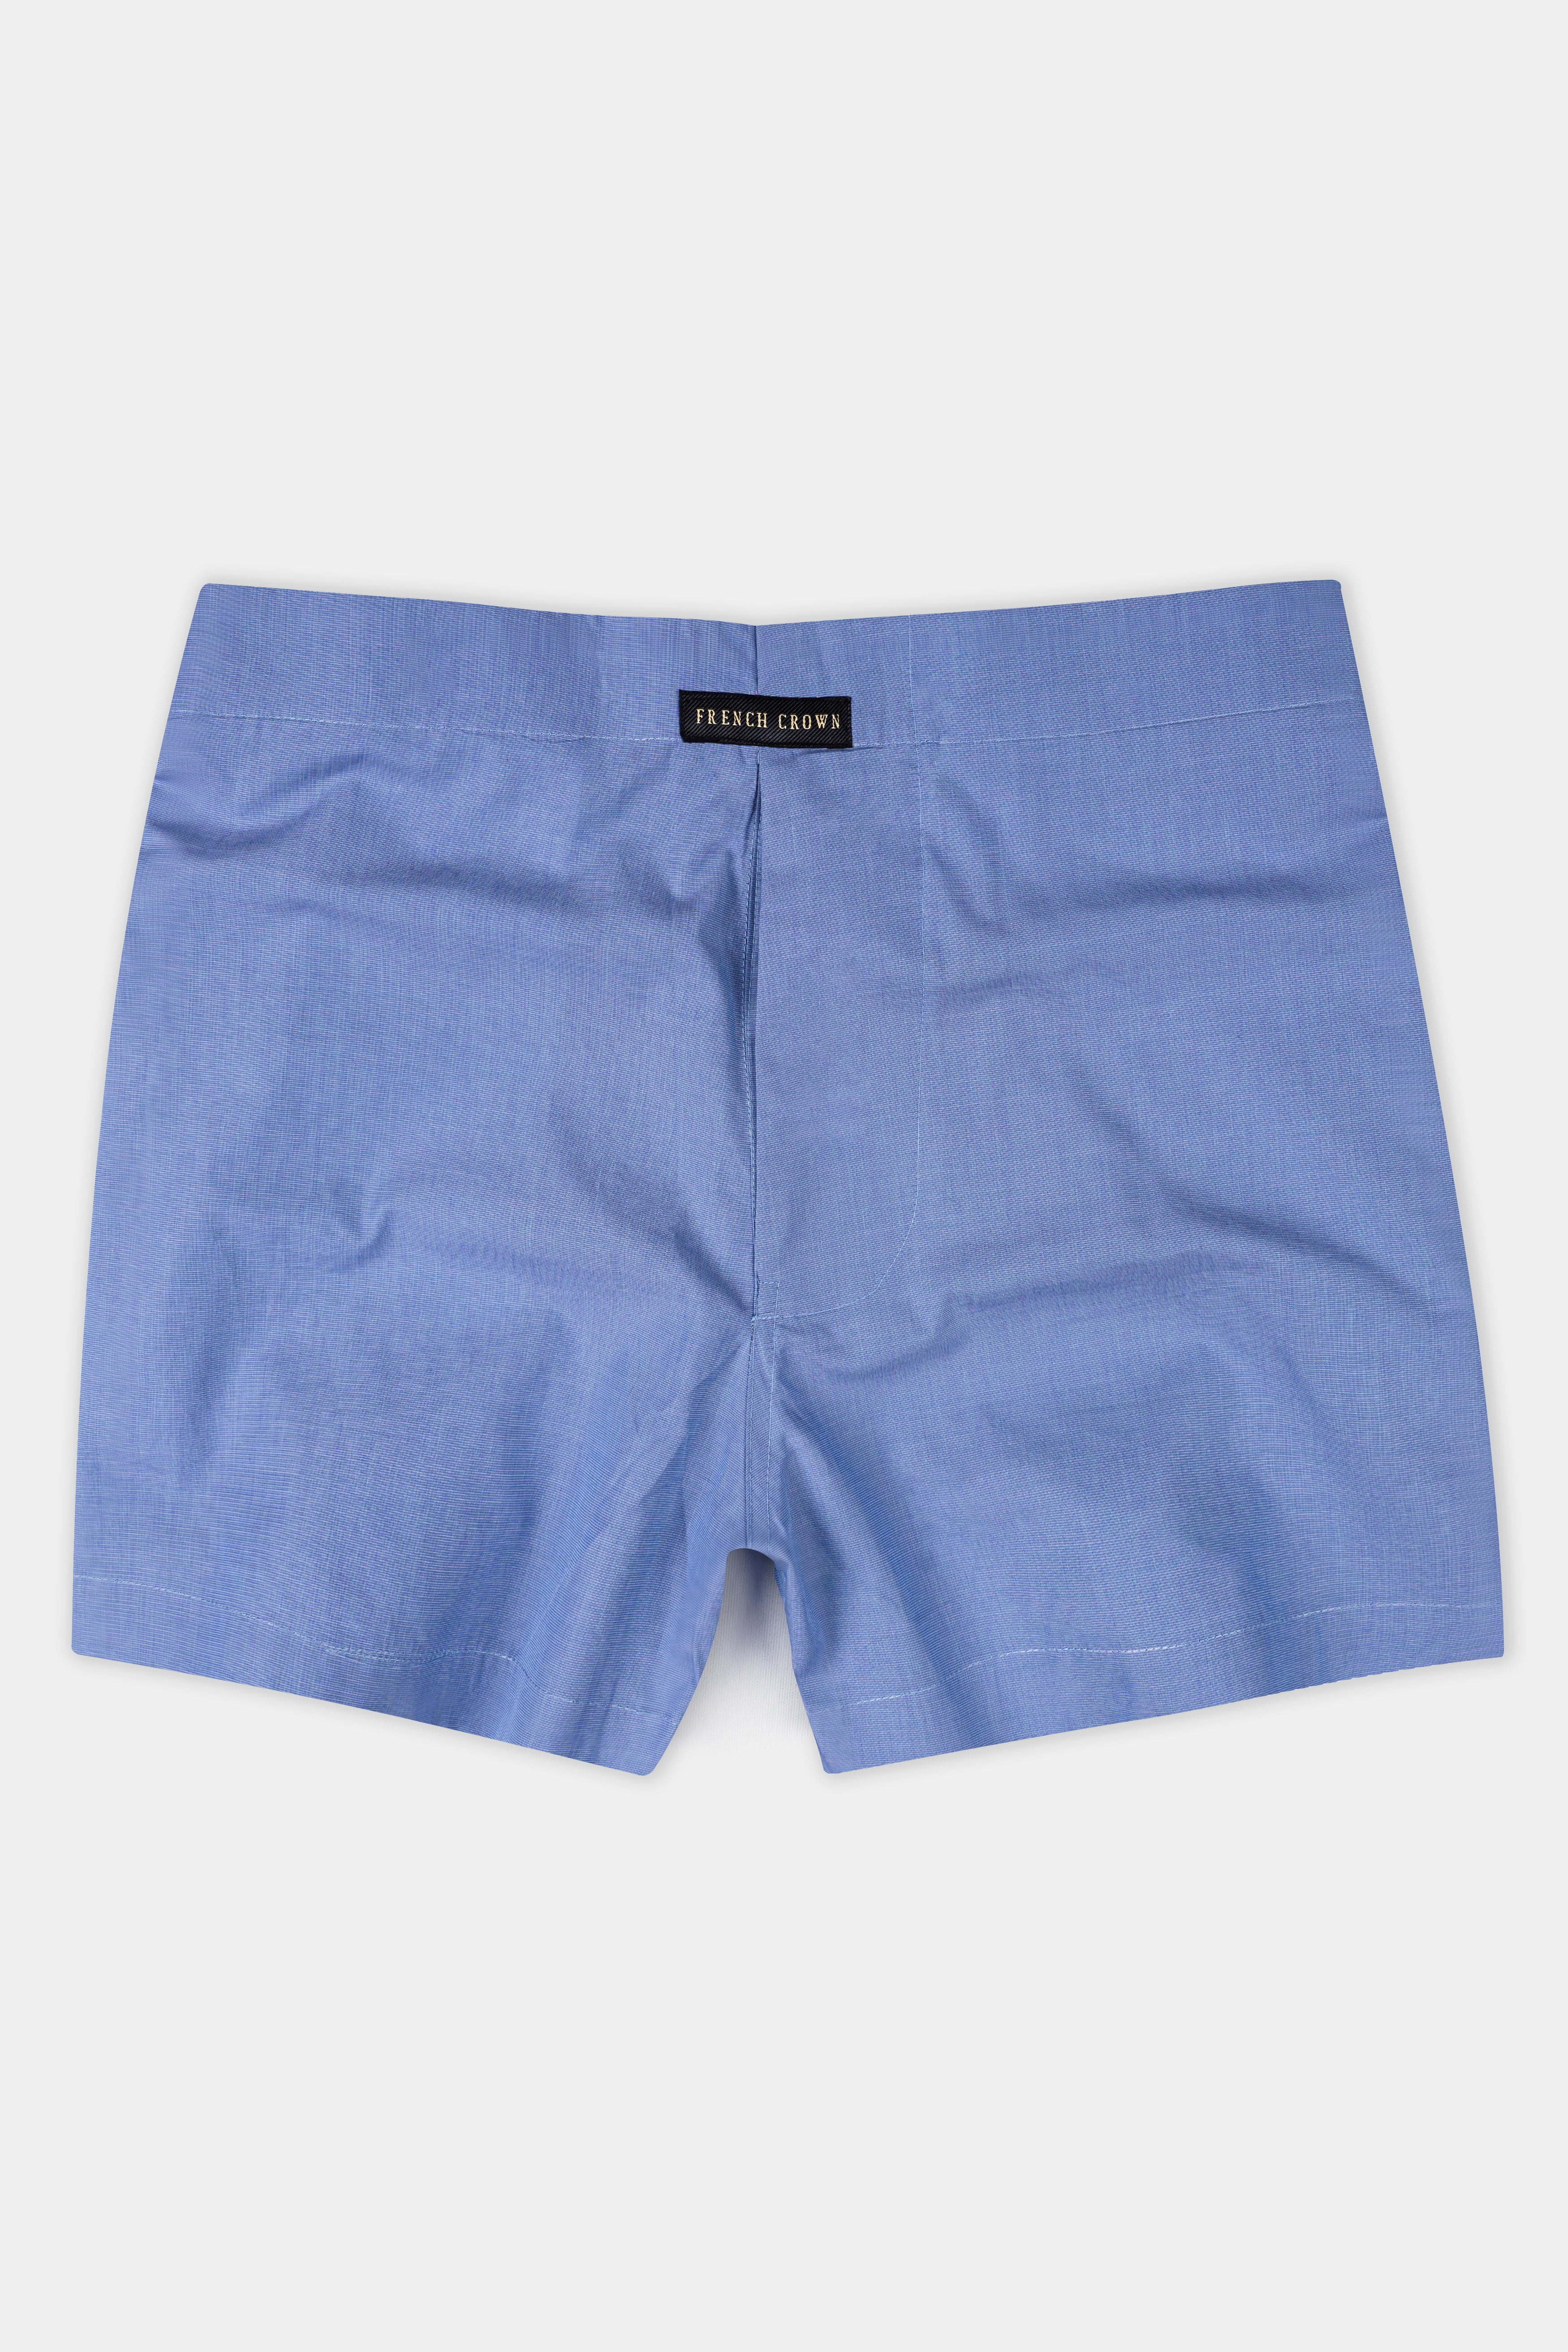 Plain Mens French Cut Blue Underwear, Briefs at Rs 58/piece in Kolkata